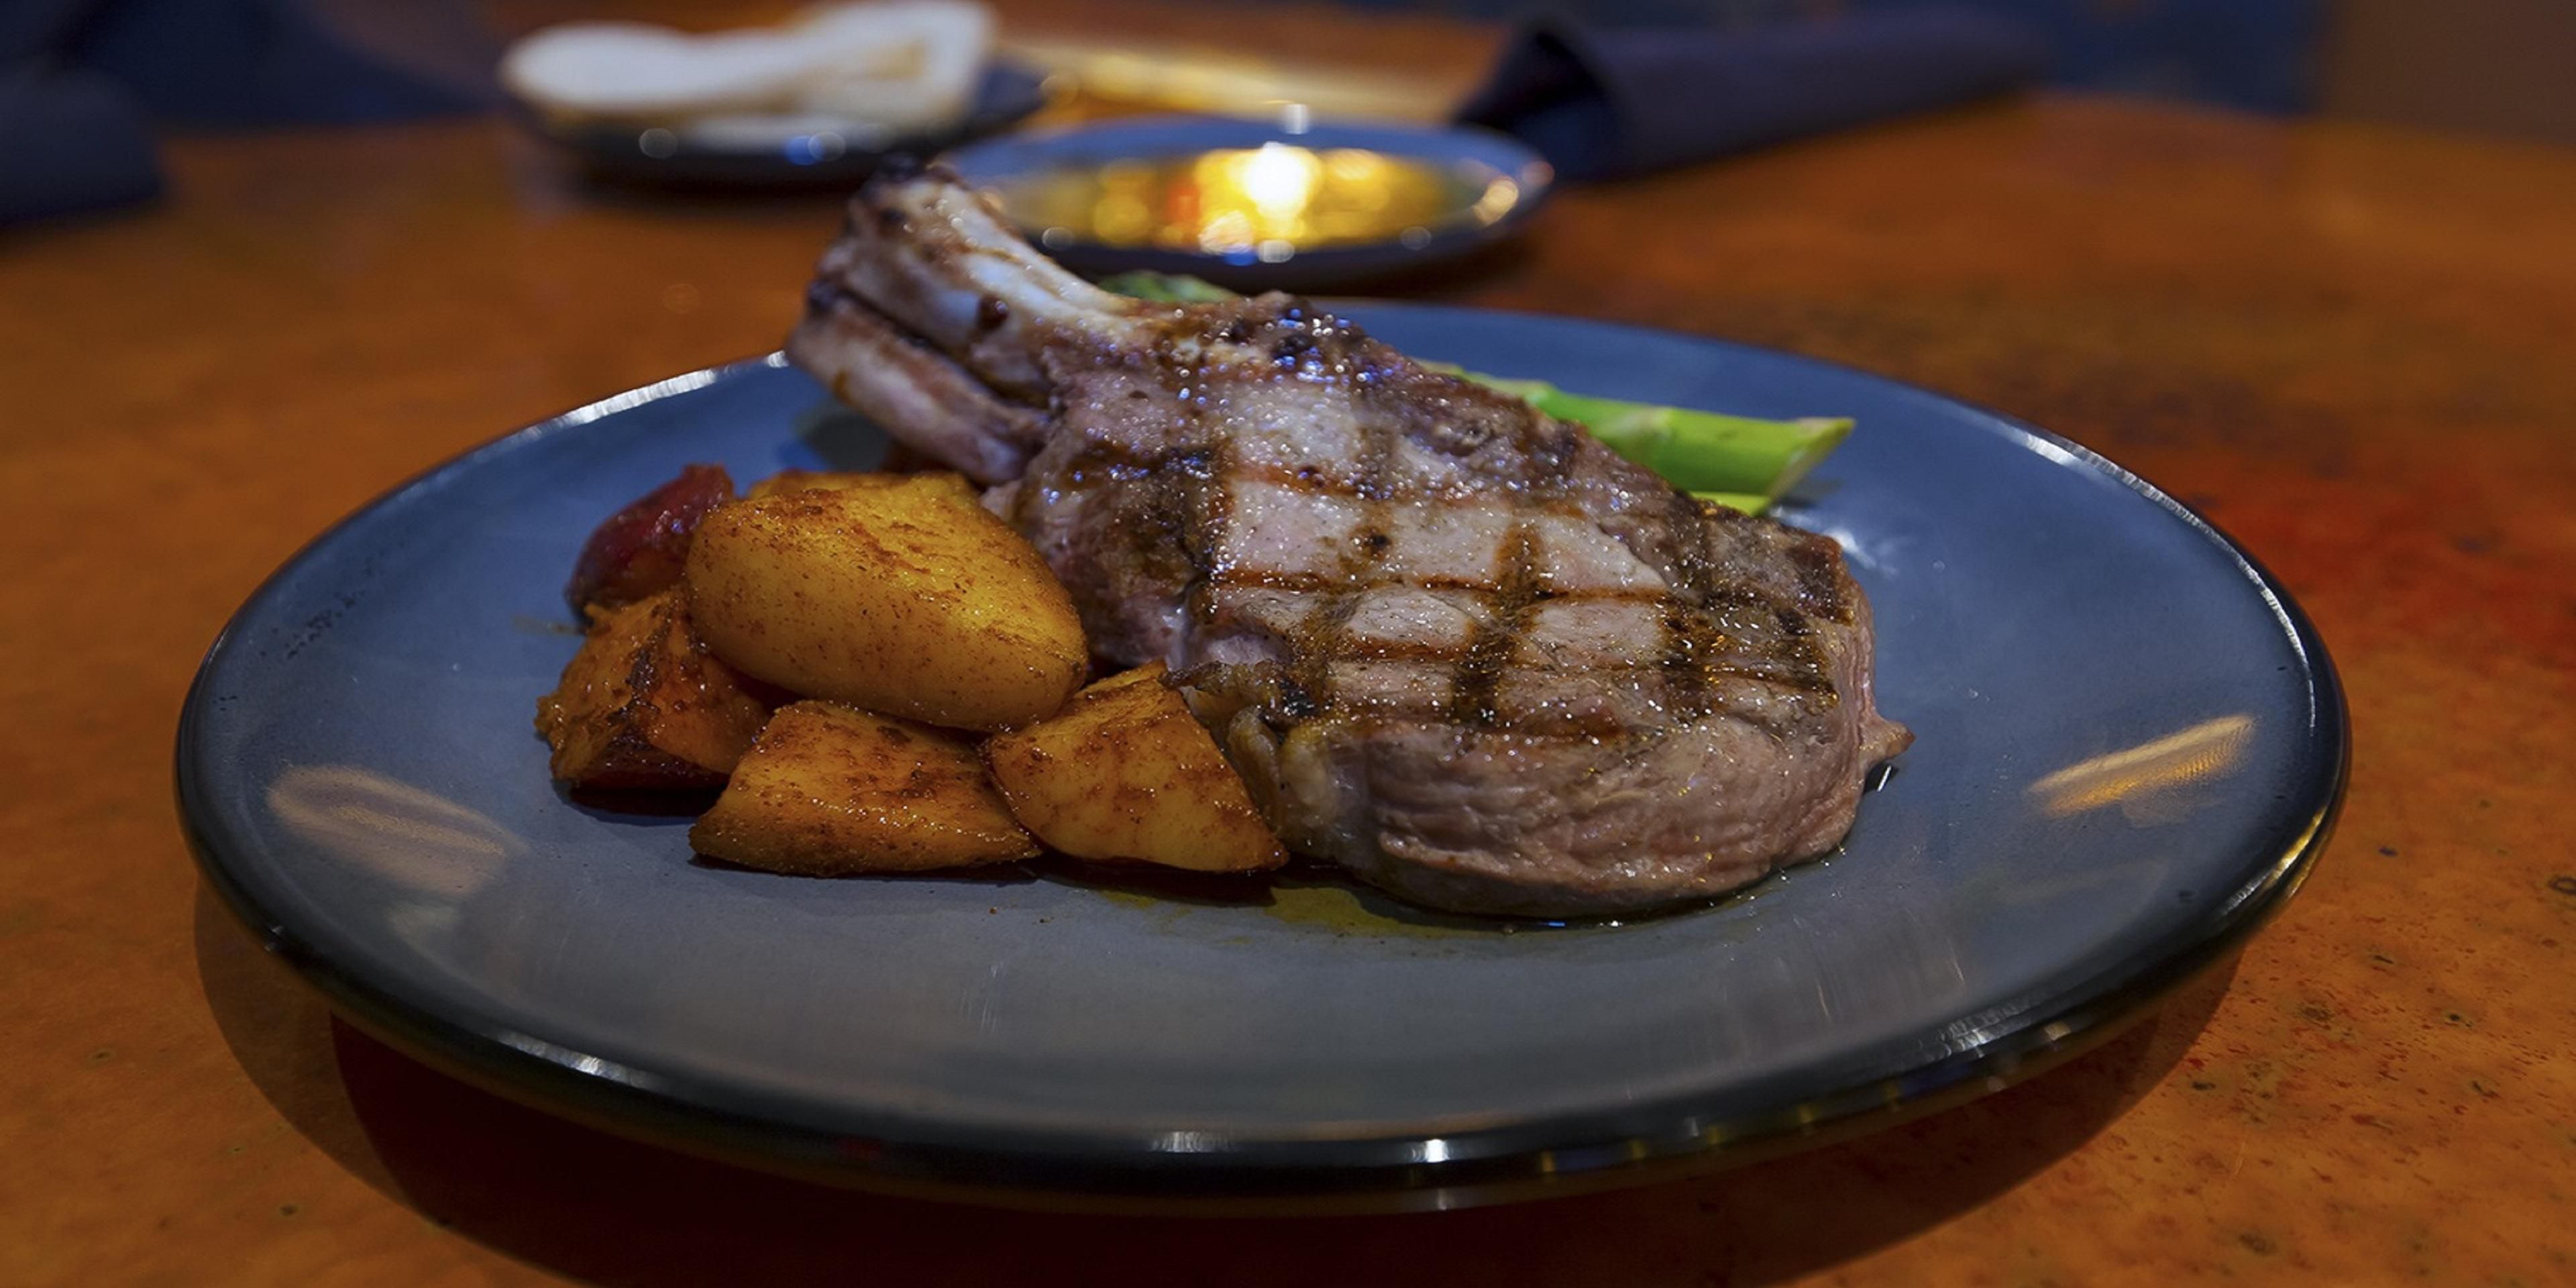 Enjoy your dinner with steak from Marion's Restaurant.